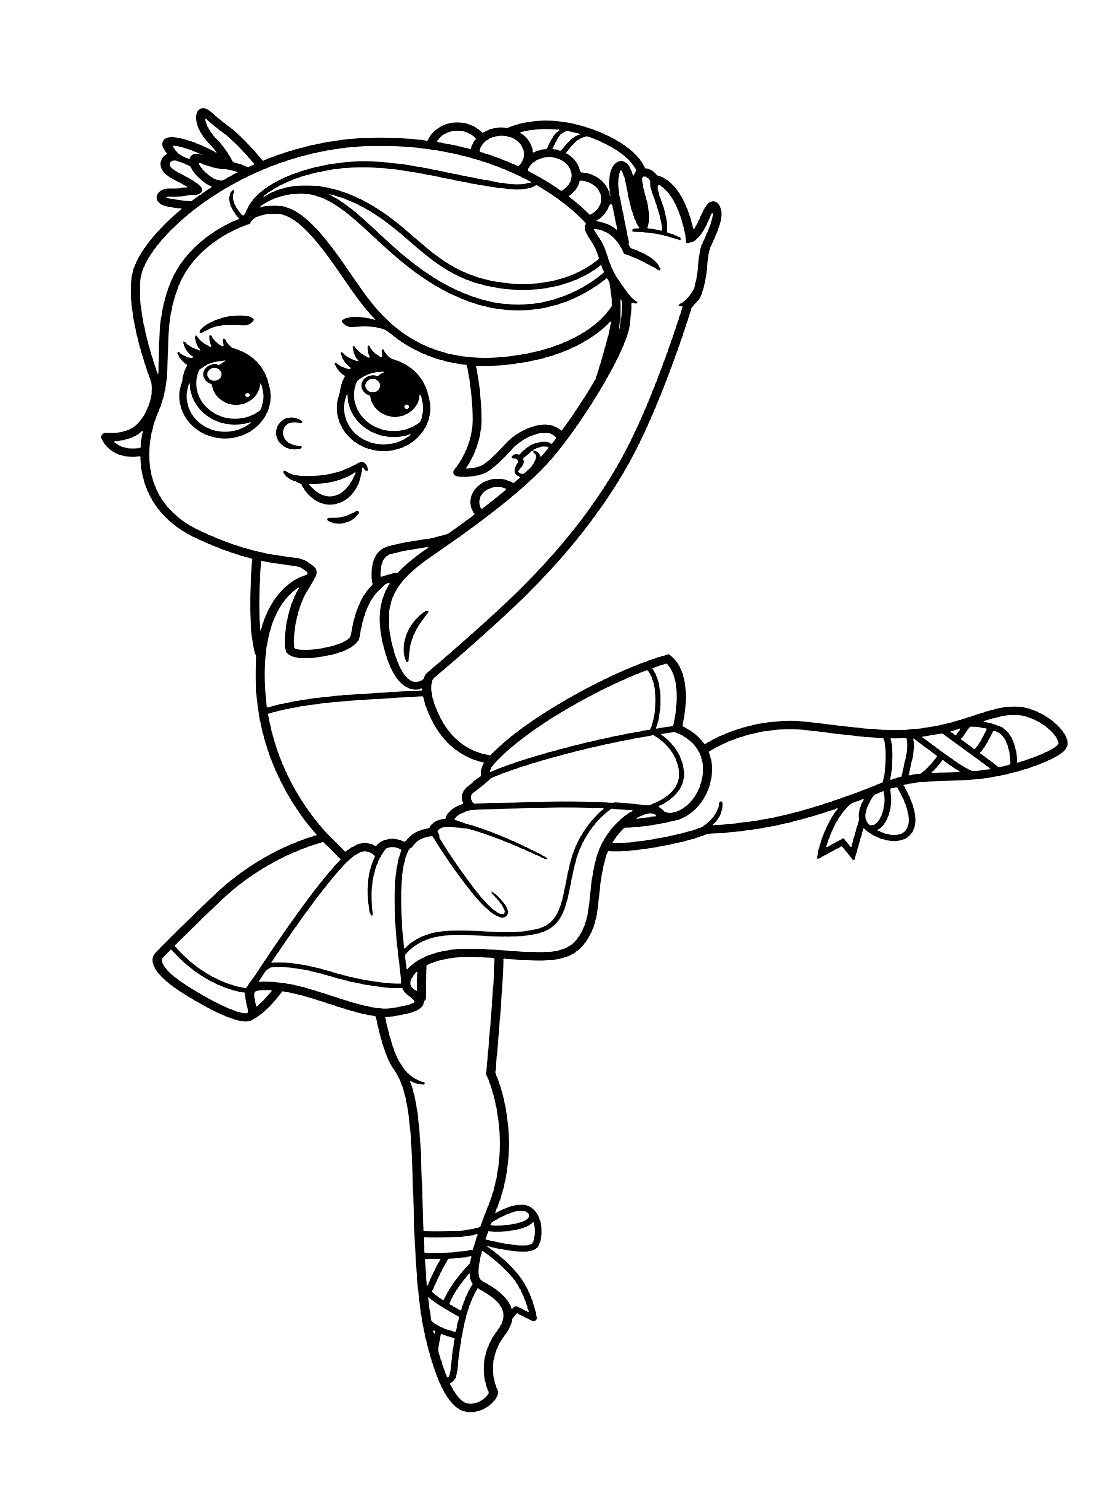 Páginas para colorear para ballet de dibujos animados de Ballerina